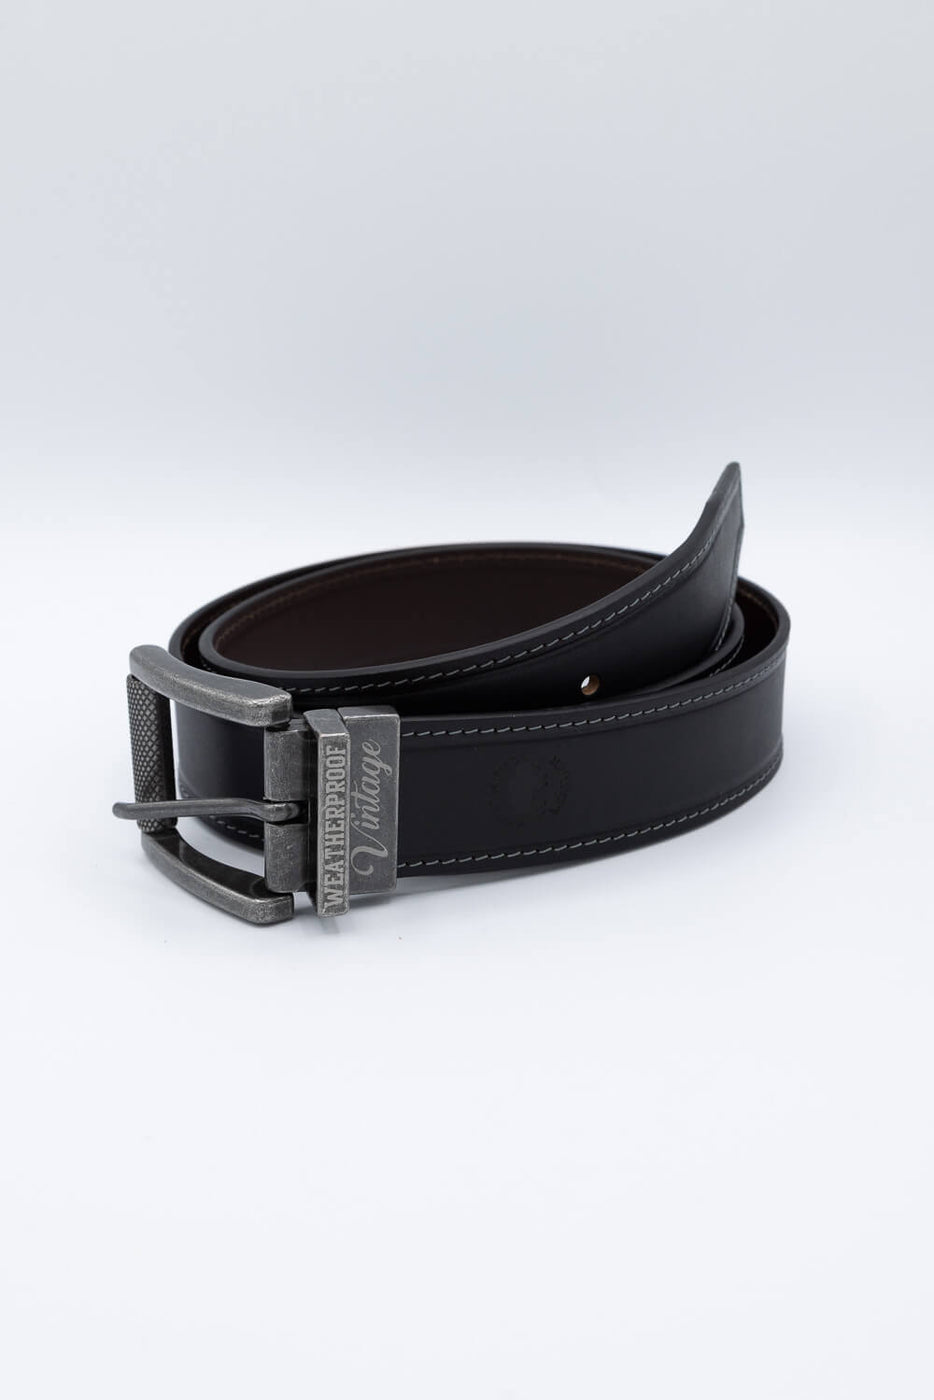 Weatherproof Vintage Reversible Leather Belt for Men in Brown ...